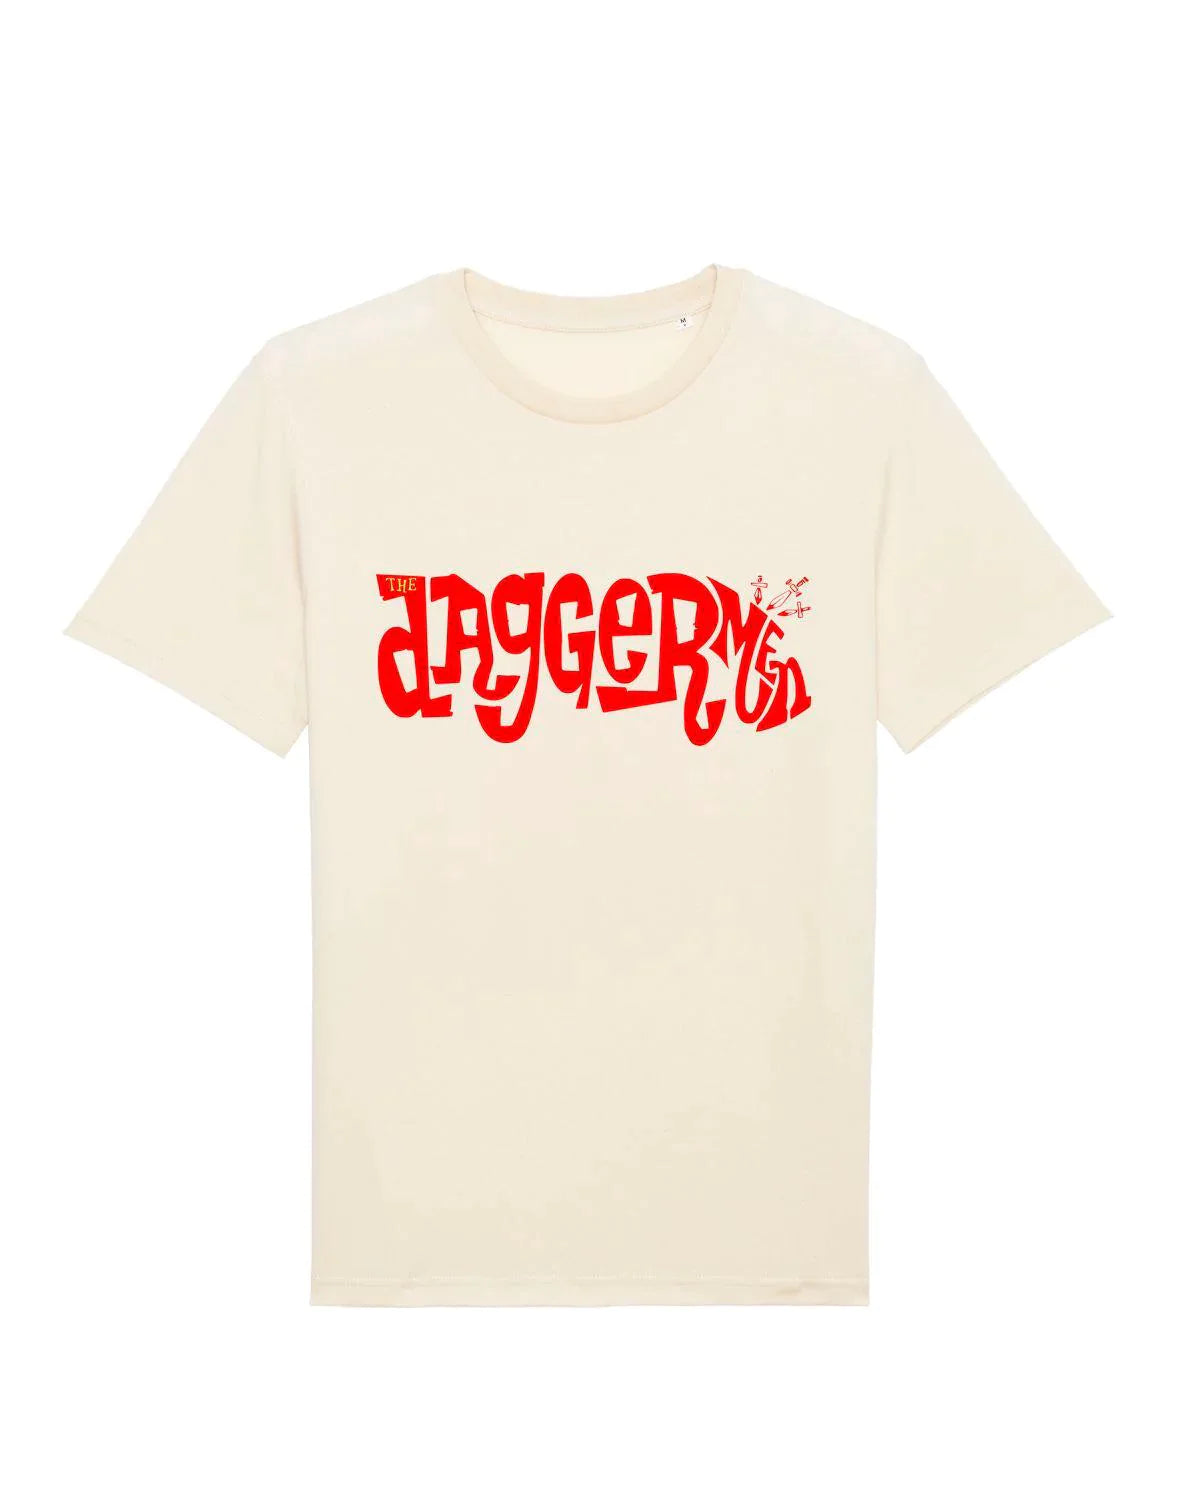 THE DAGGERMEN: Logo T-Shirt Official Merchandise by Sound is Colour (Many Colours) - SOUND IS COLOUR